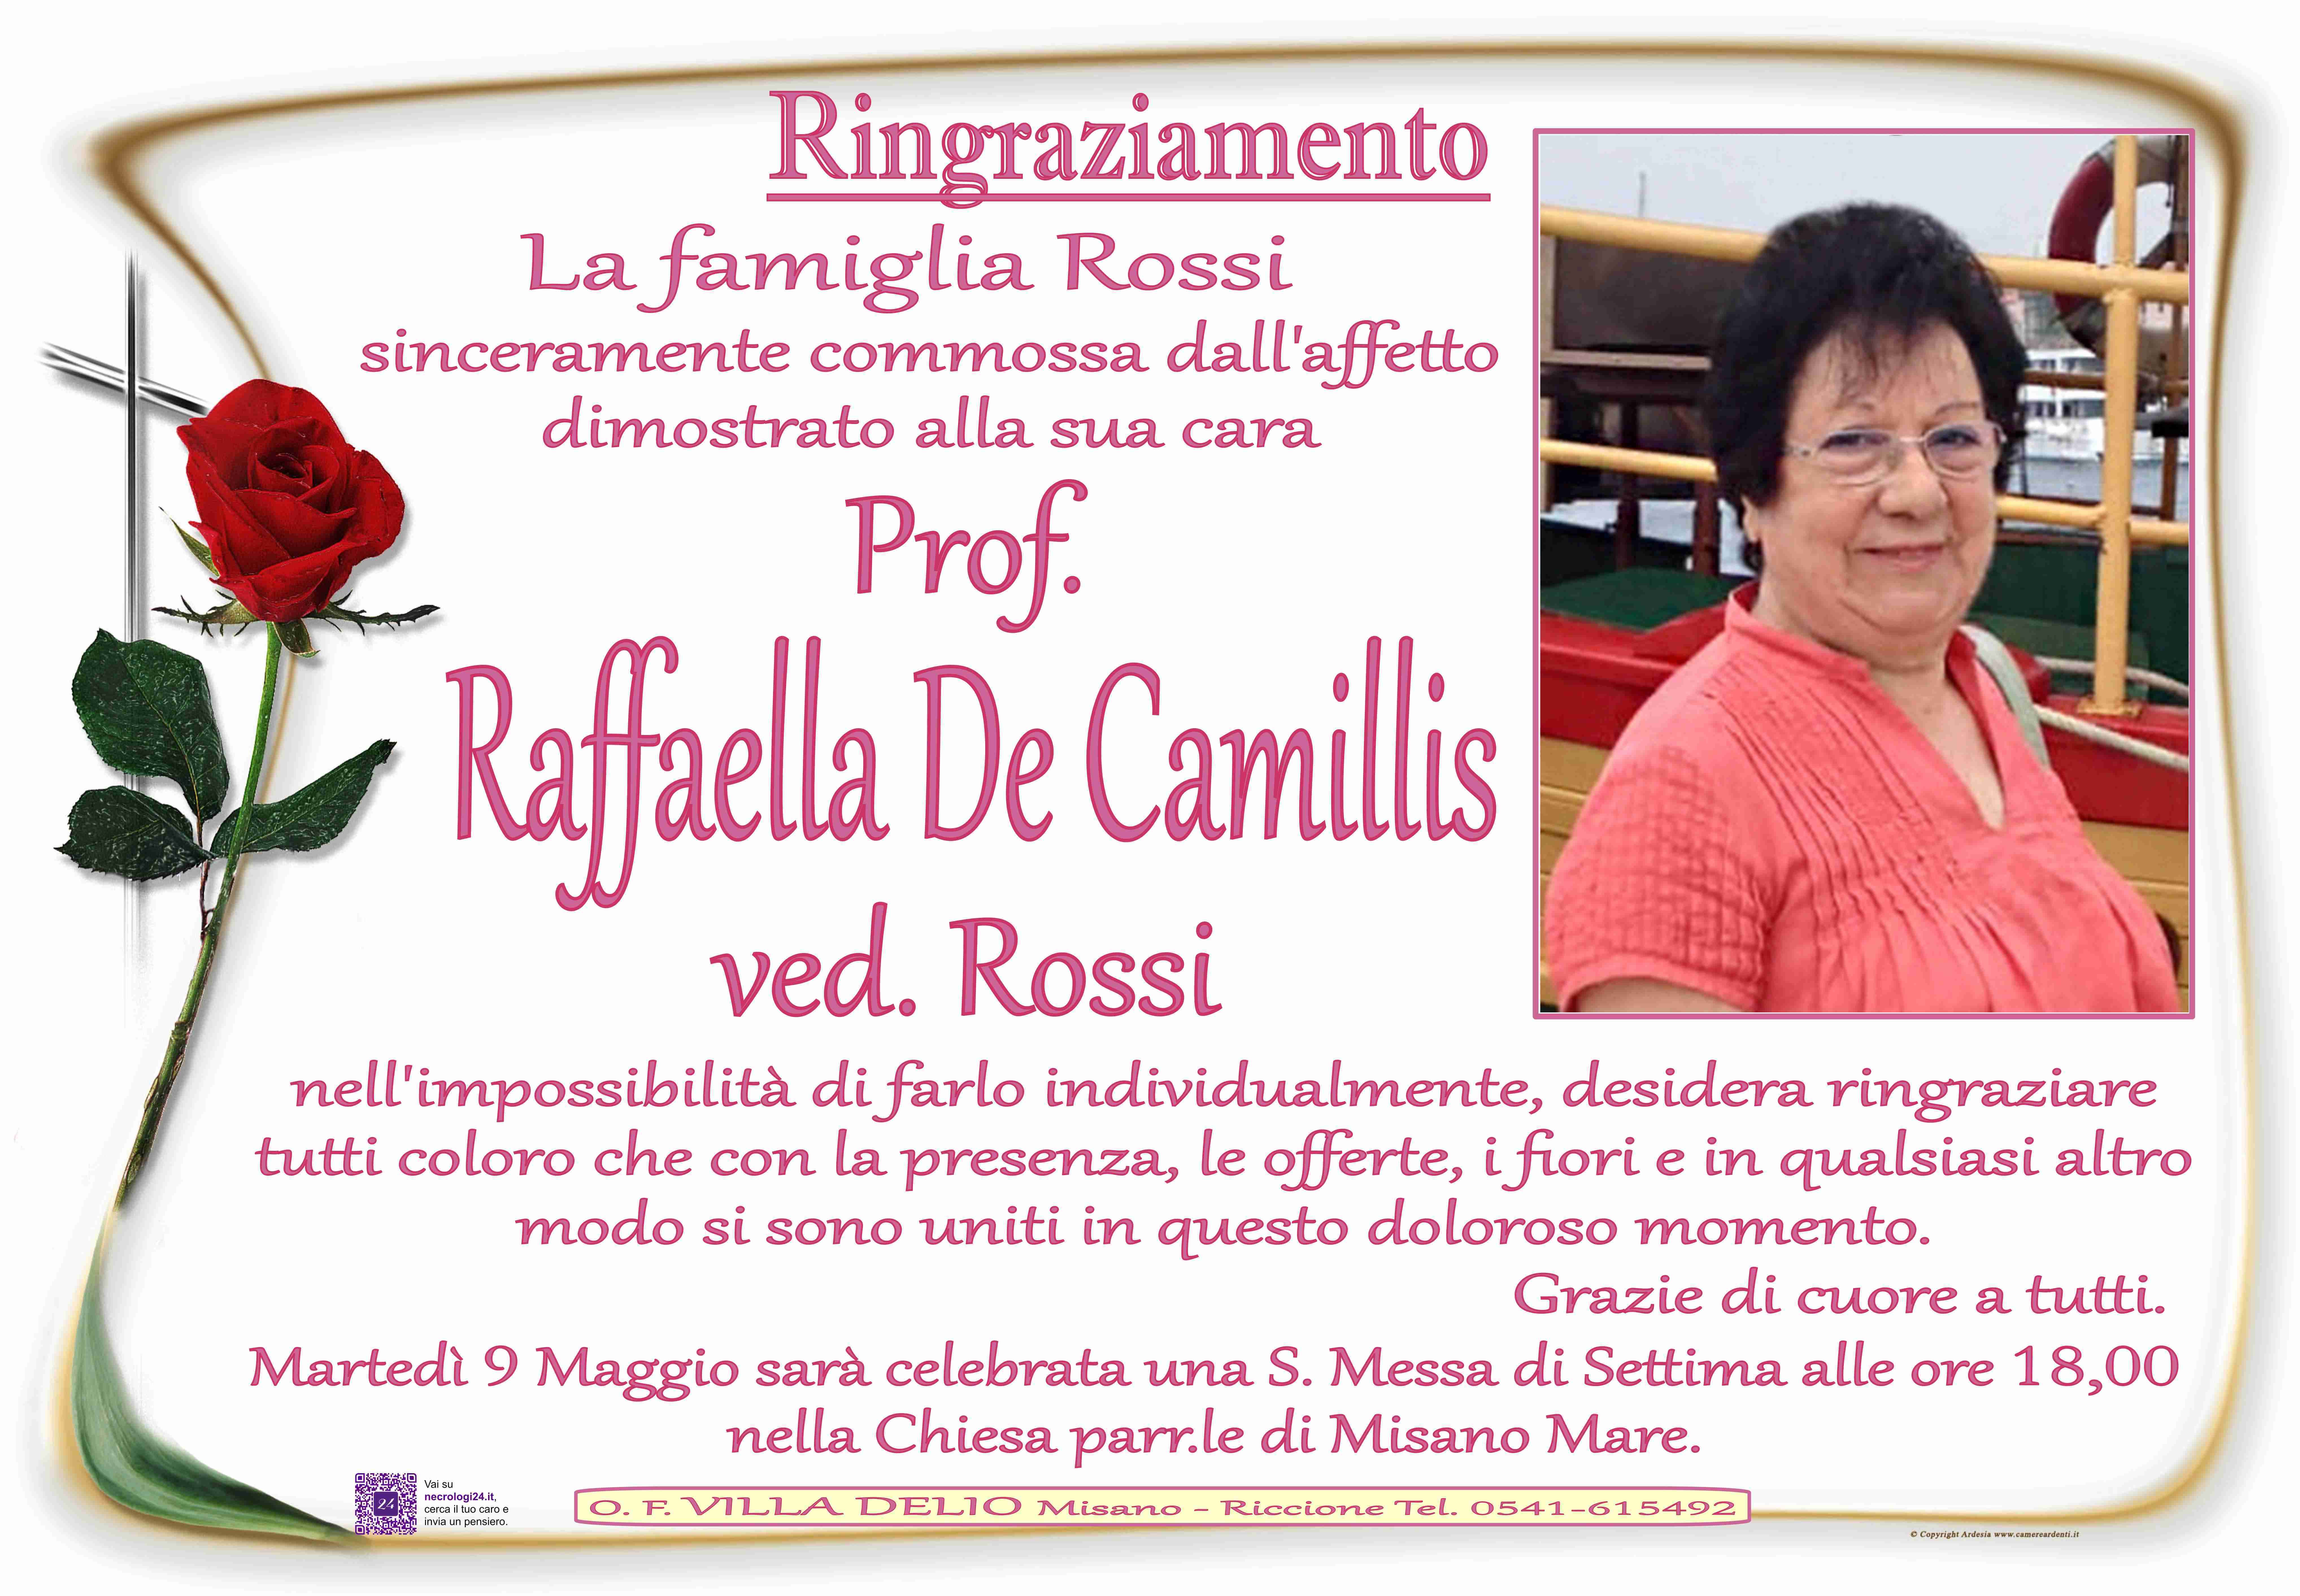 Raffaella De Camillis